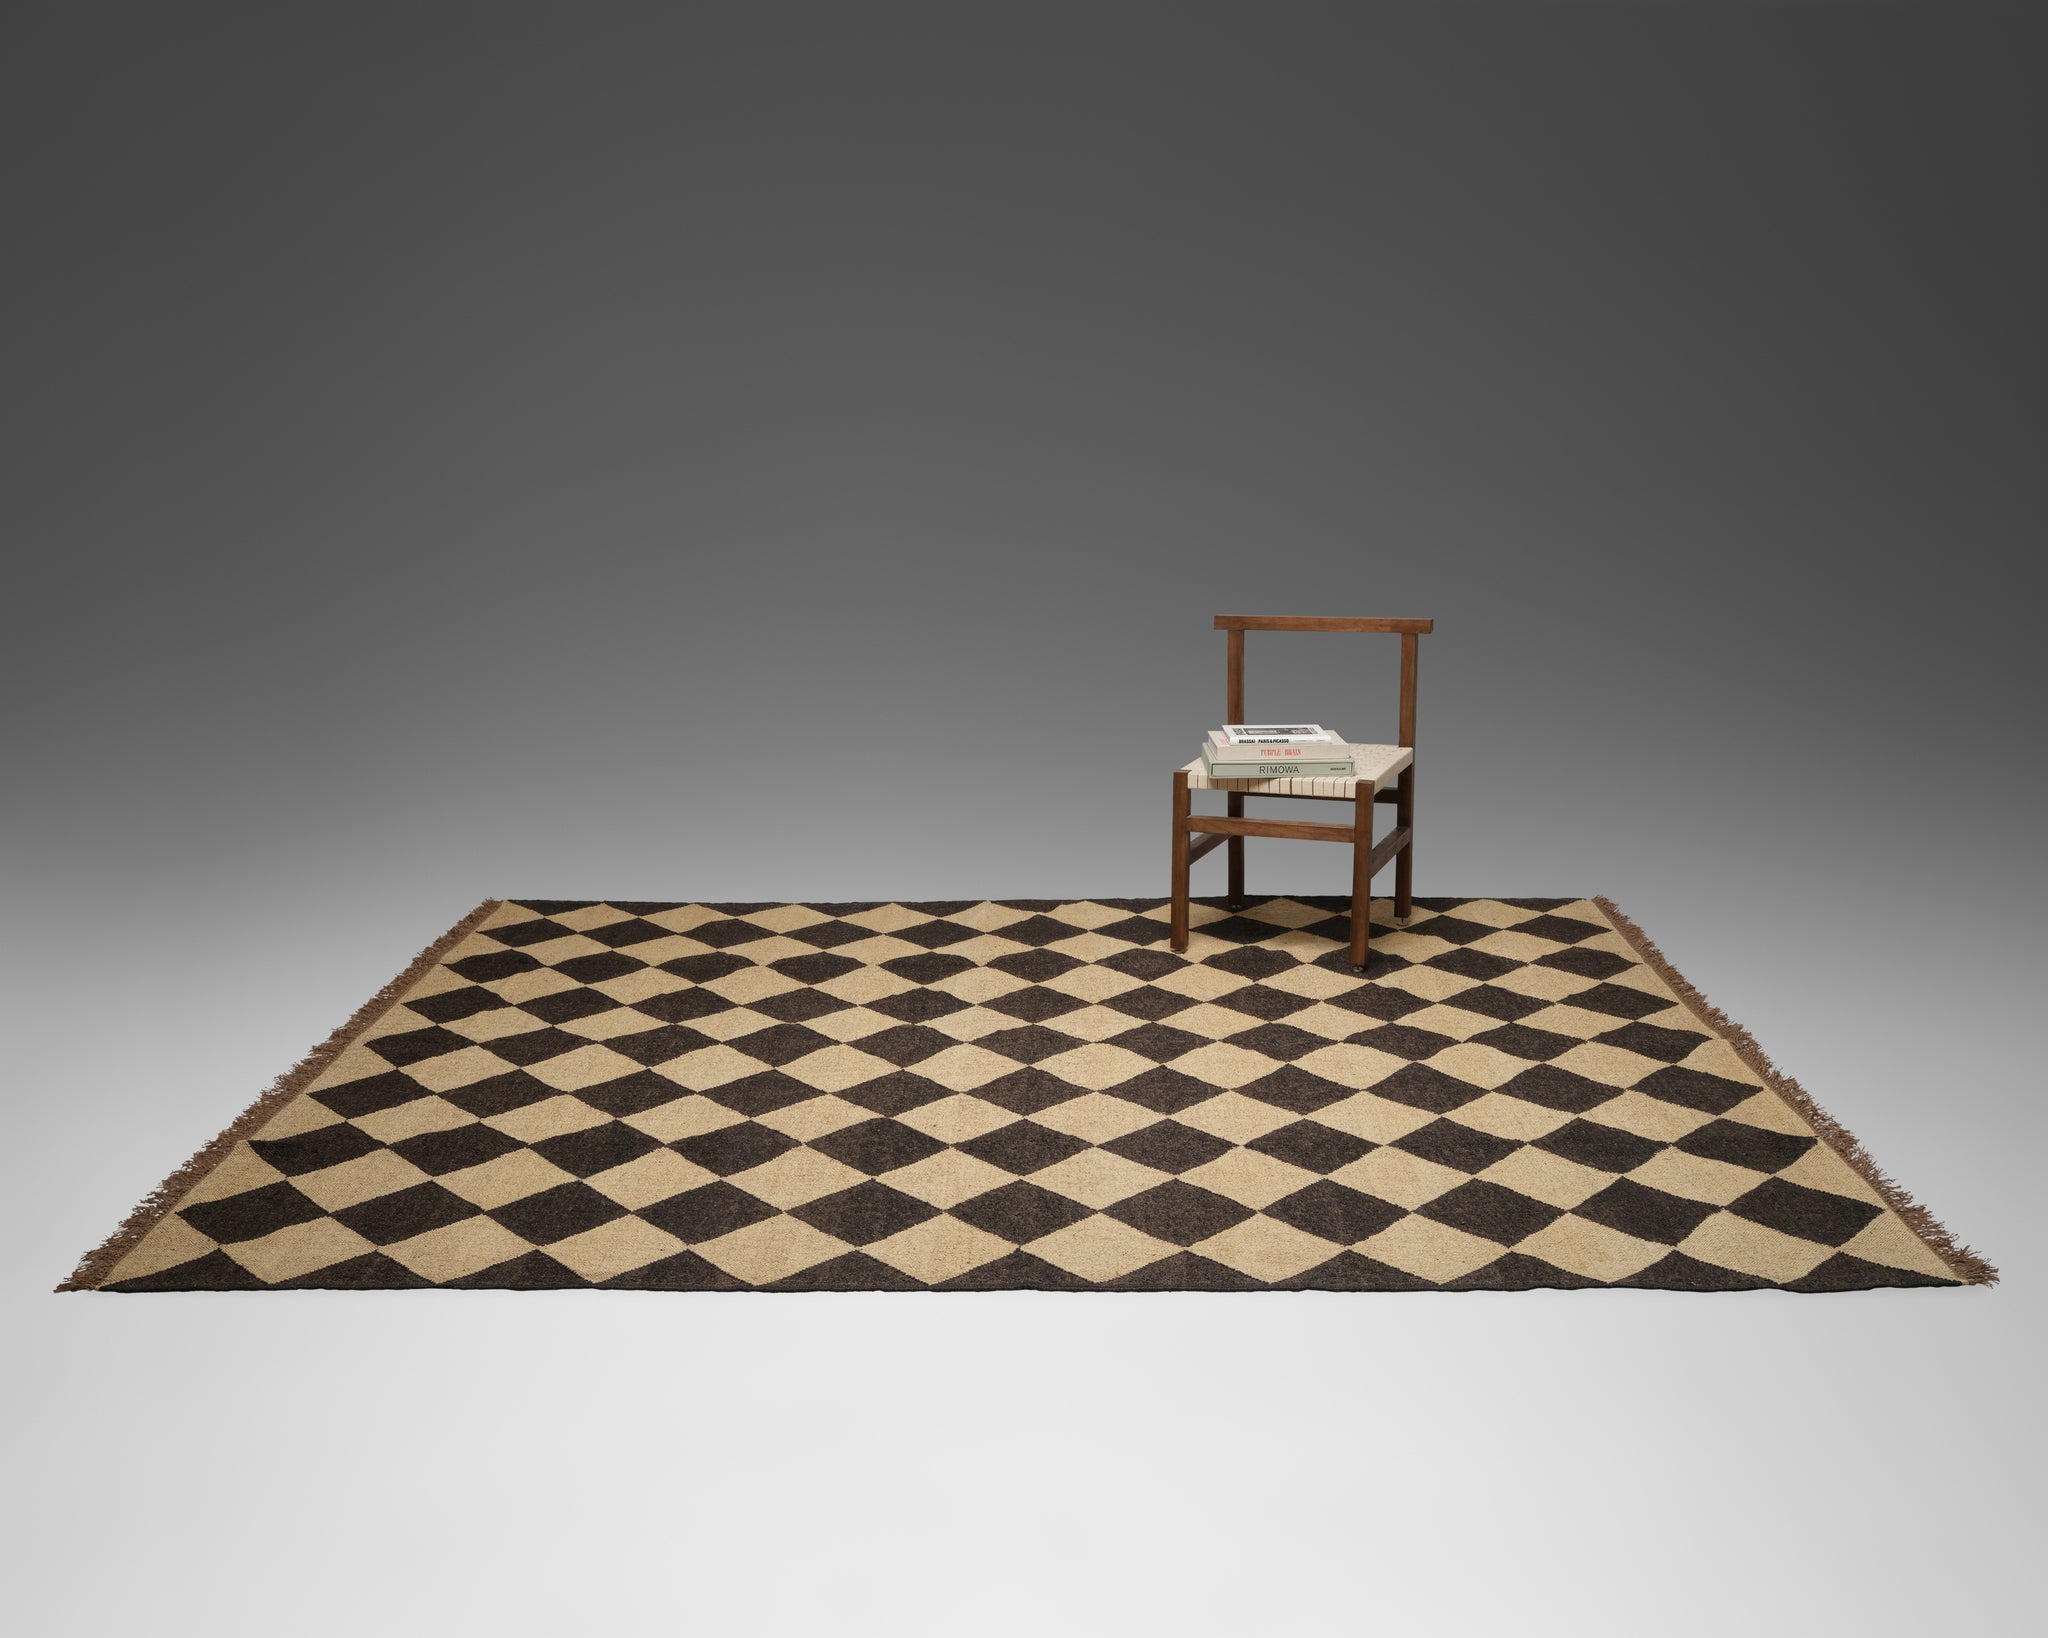 The Forsyth Checkerboard Rug - Diamond Check in Off Black